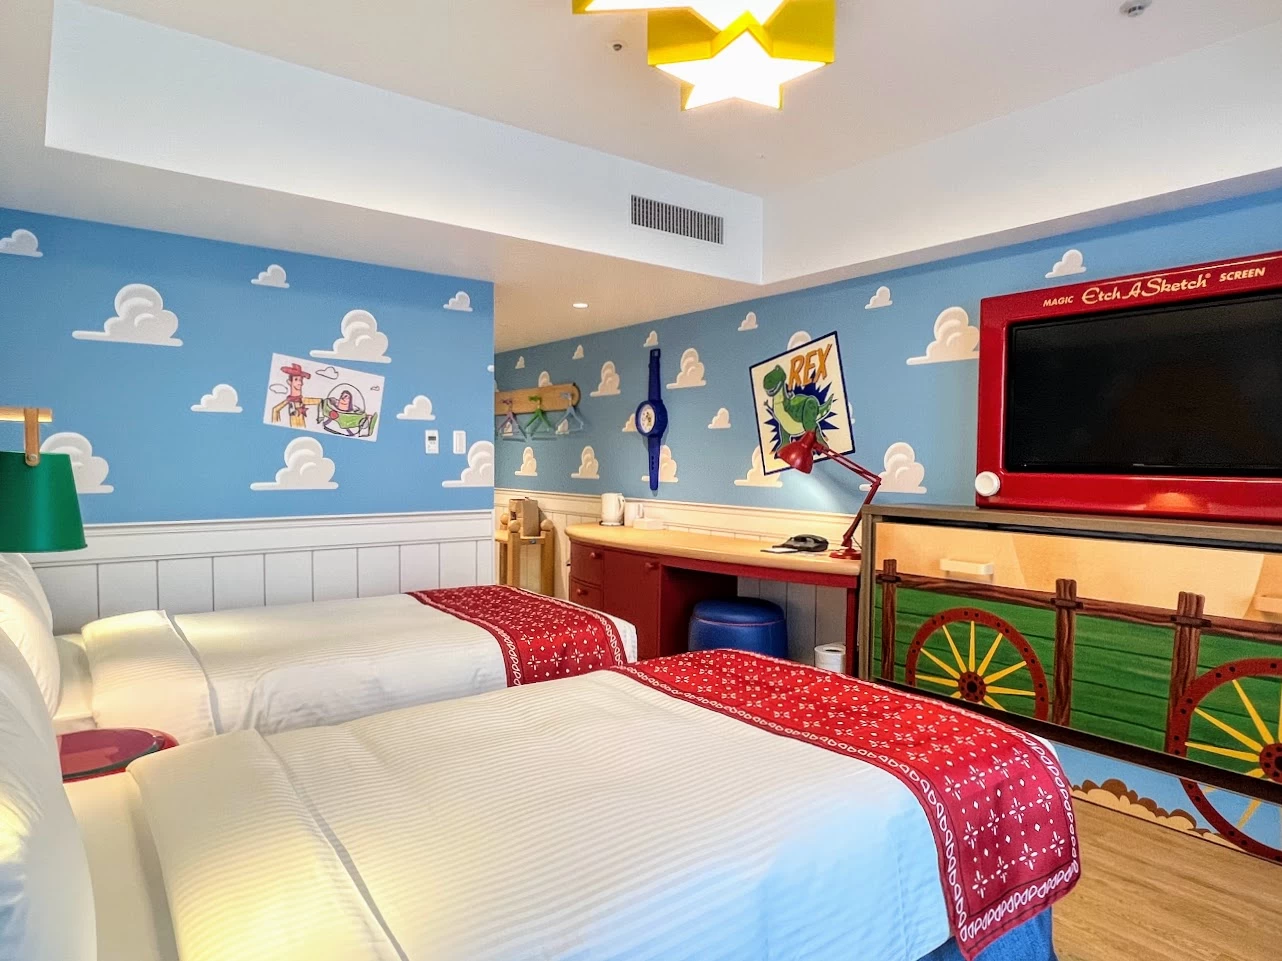 Official]Tokyo Disney Resort Toy Story Hotel